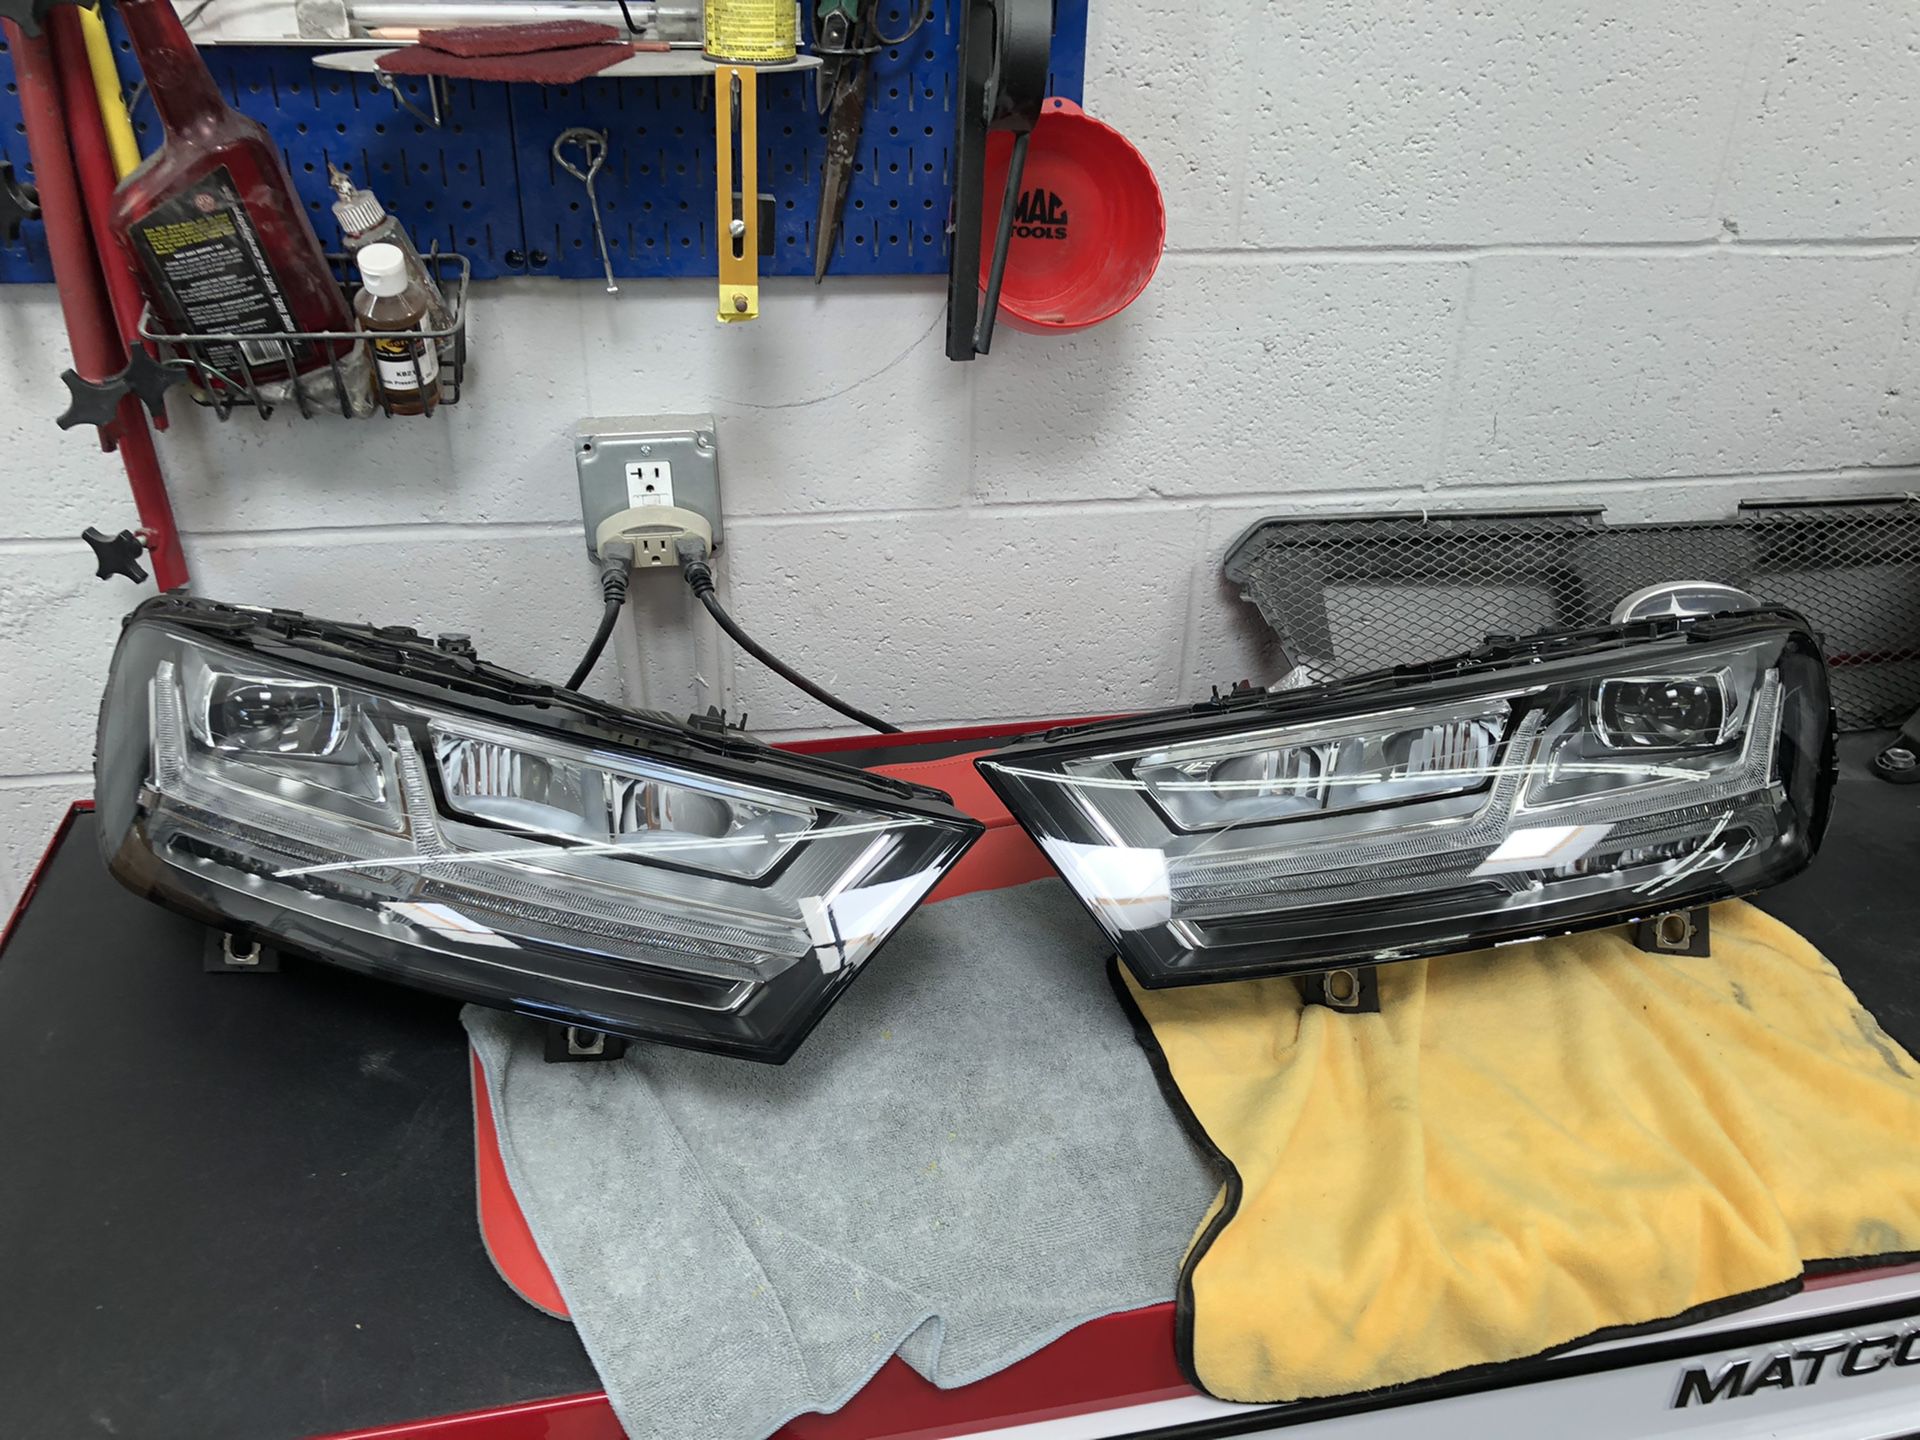 2019 Audi Q7 headlights and tail lights